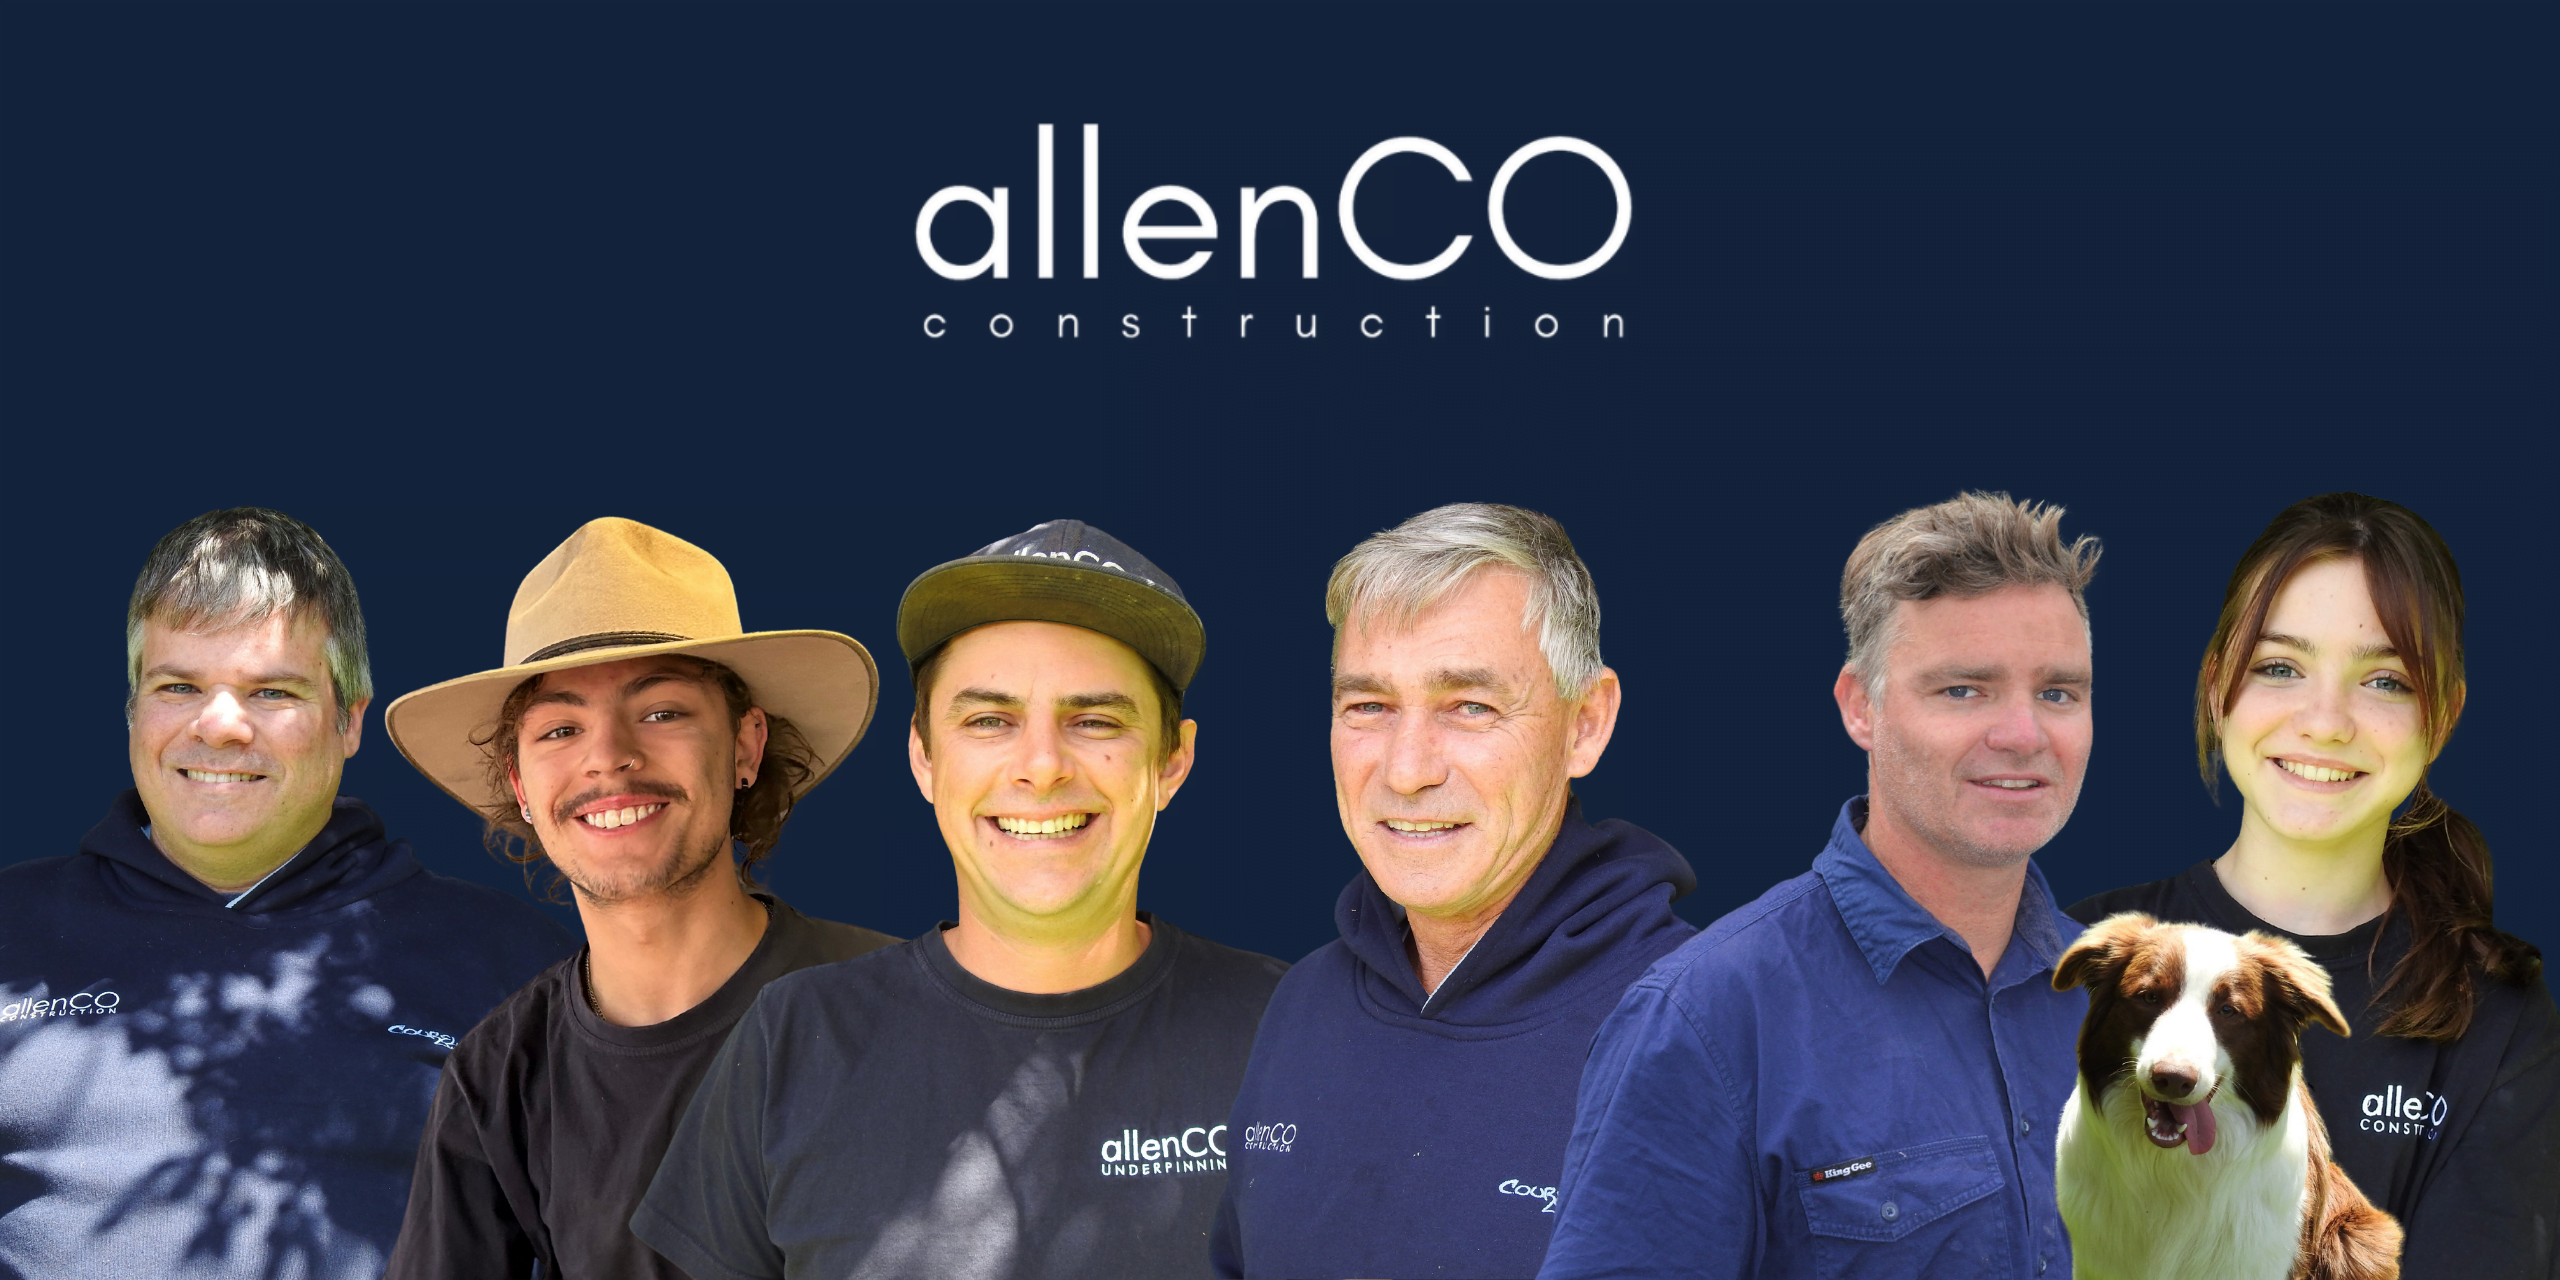 The allenCO construction team